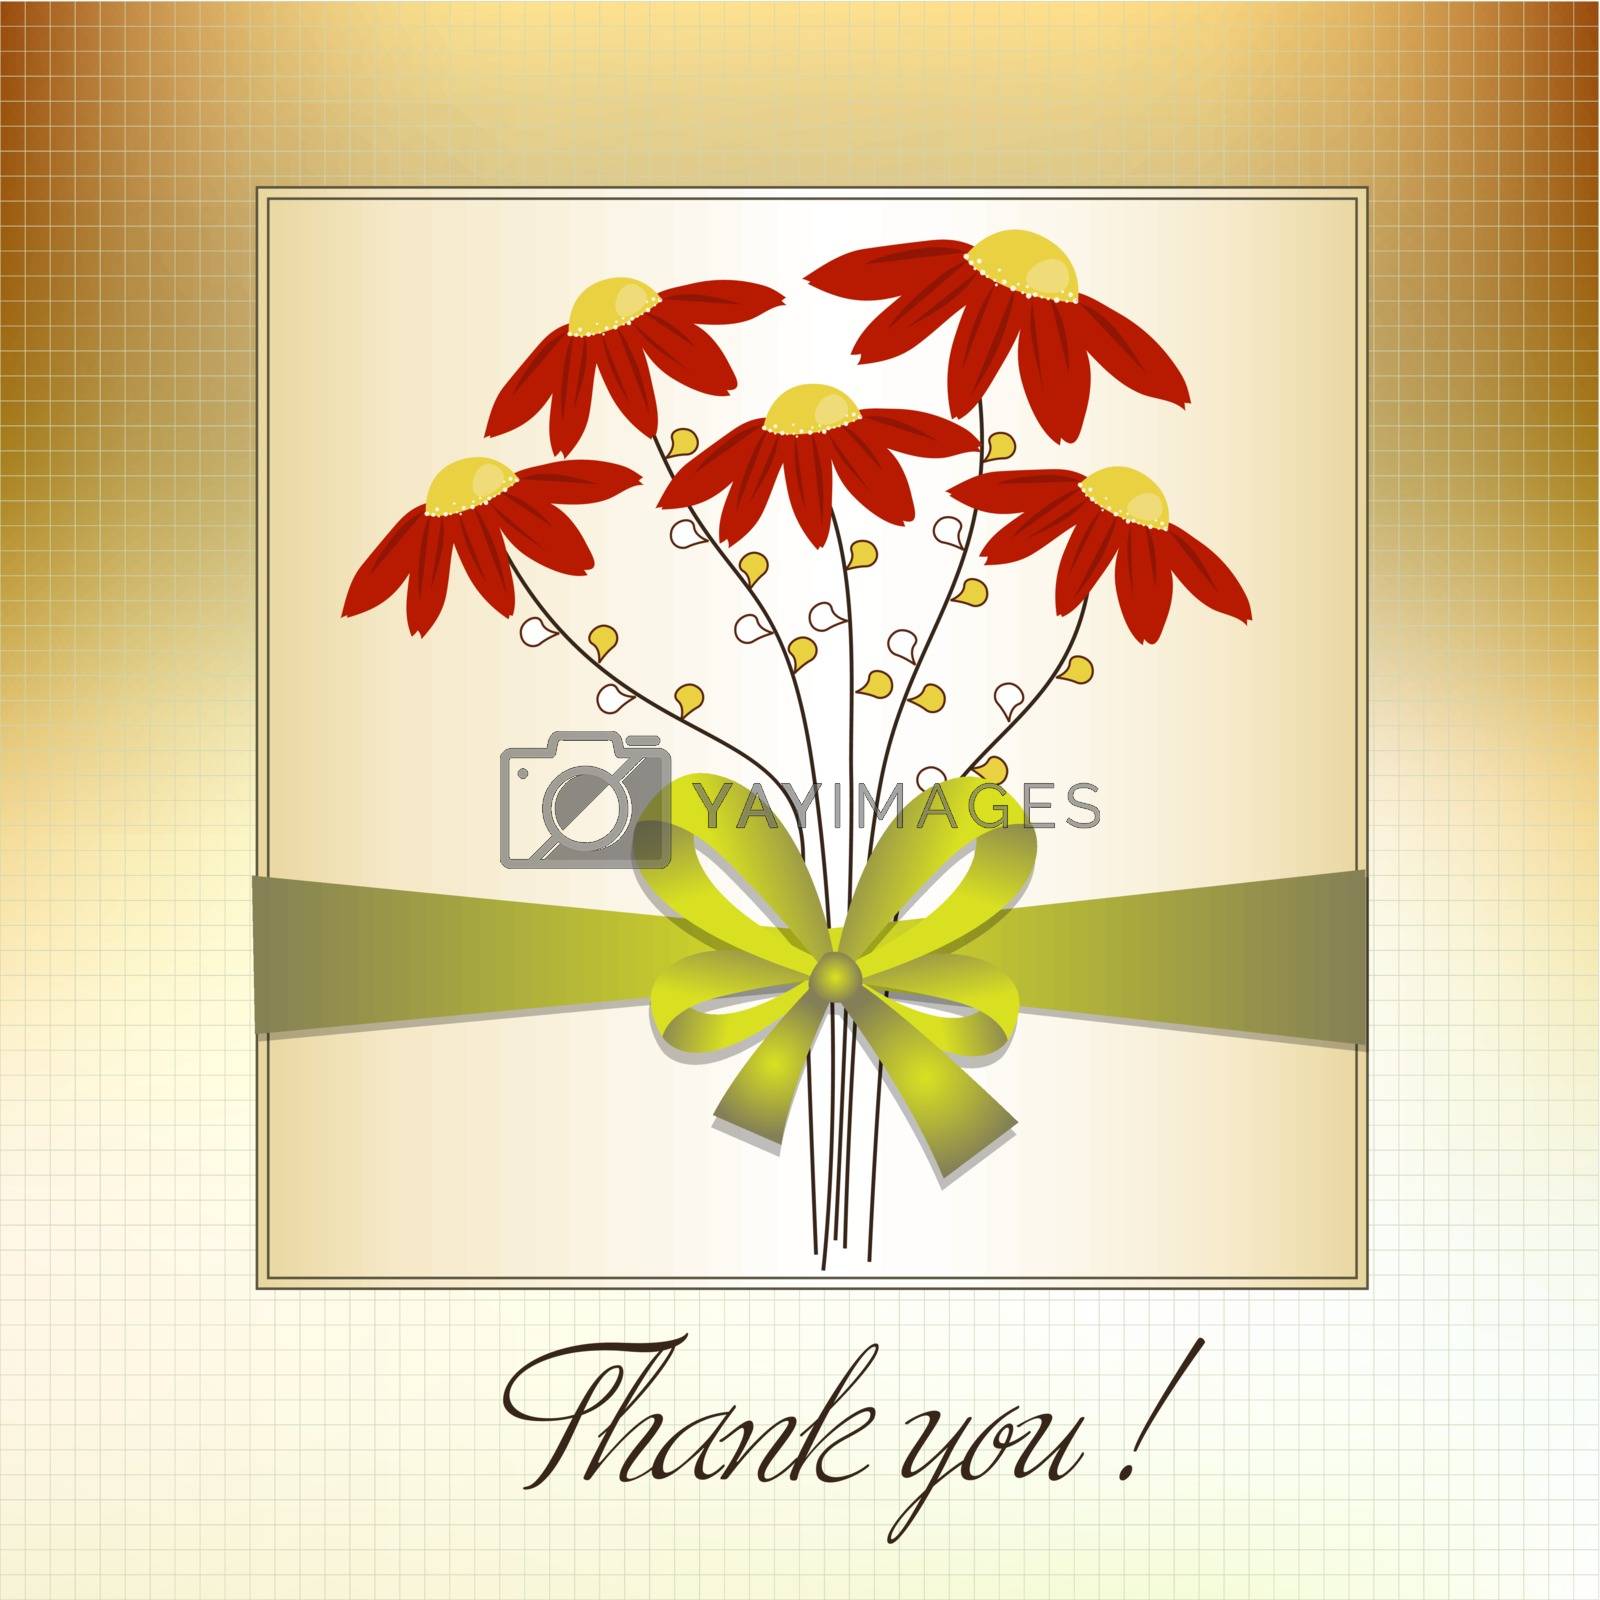 Royalty free image of thank you card by balasoiu